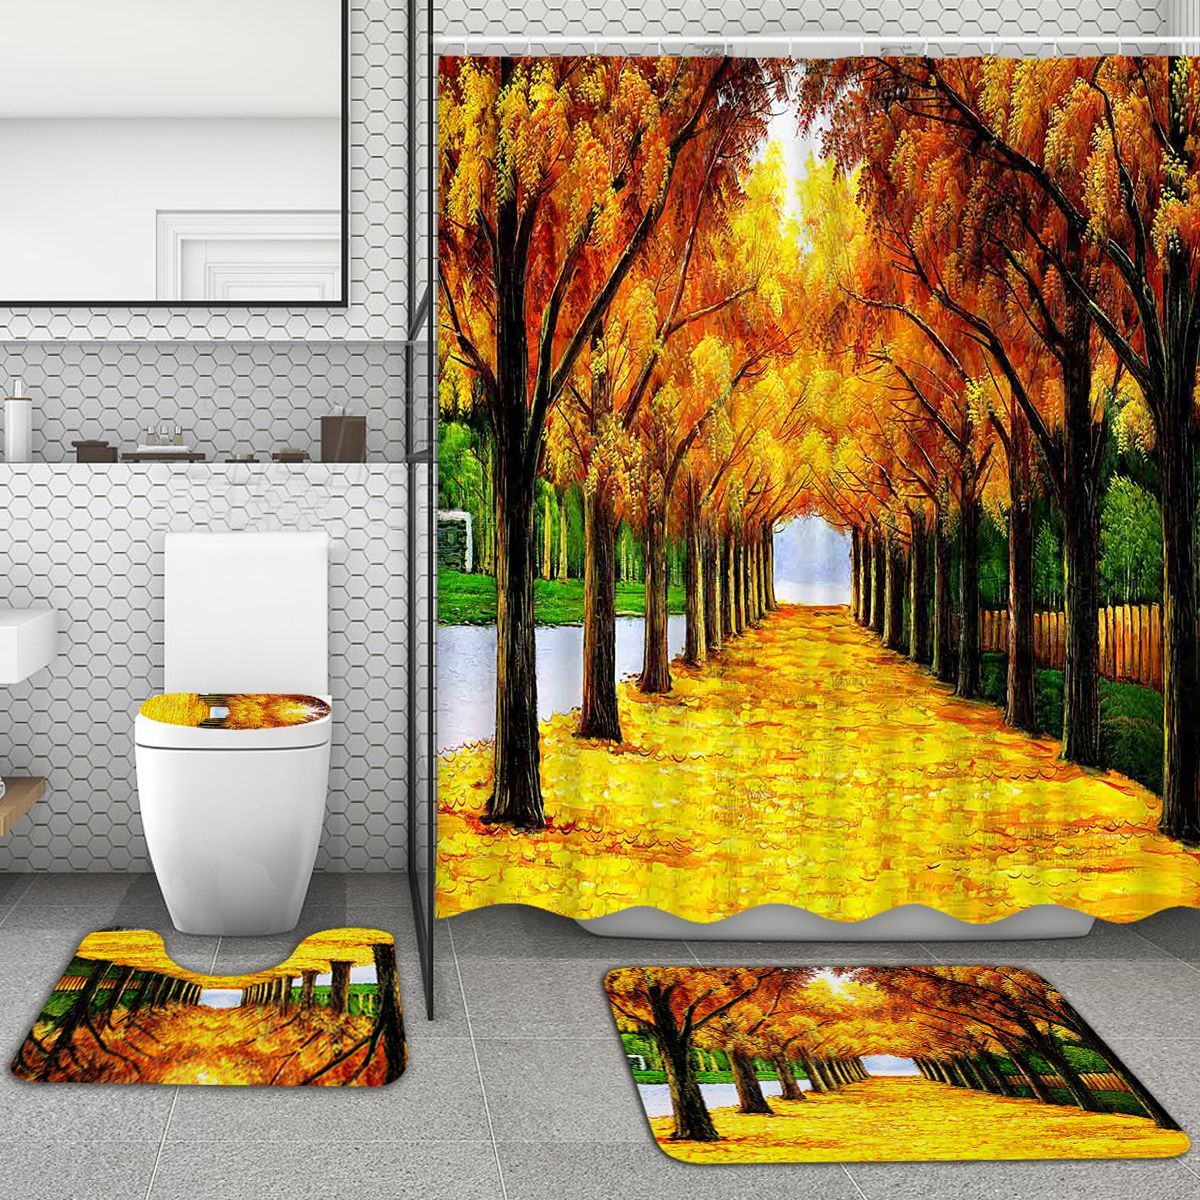 180X180CM-Forest-Waterproof-Shower-Curtain-Bathroom-Toilet-Lid-Seat-Cover-Bath-Mat-Pad-Set-1563971